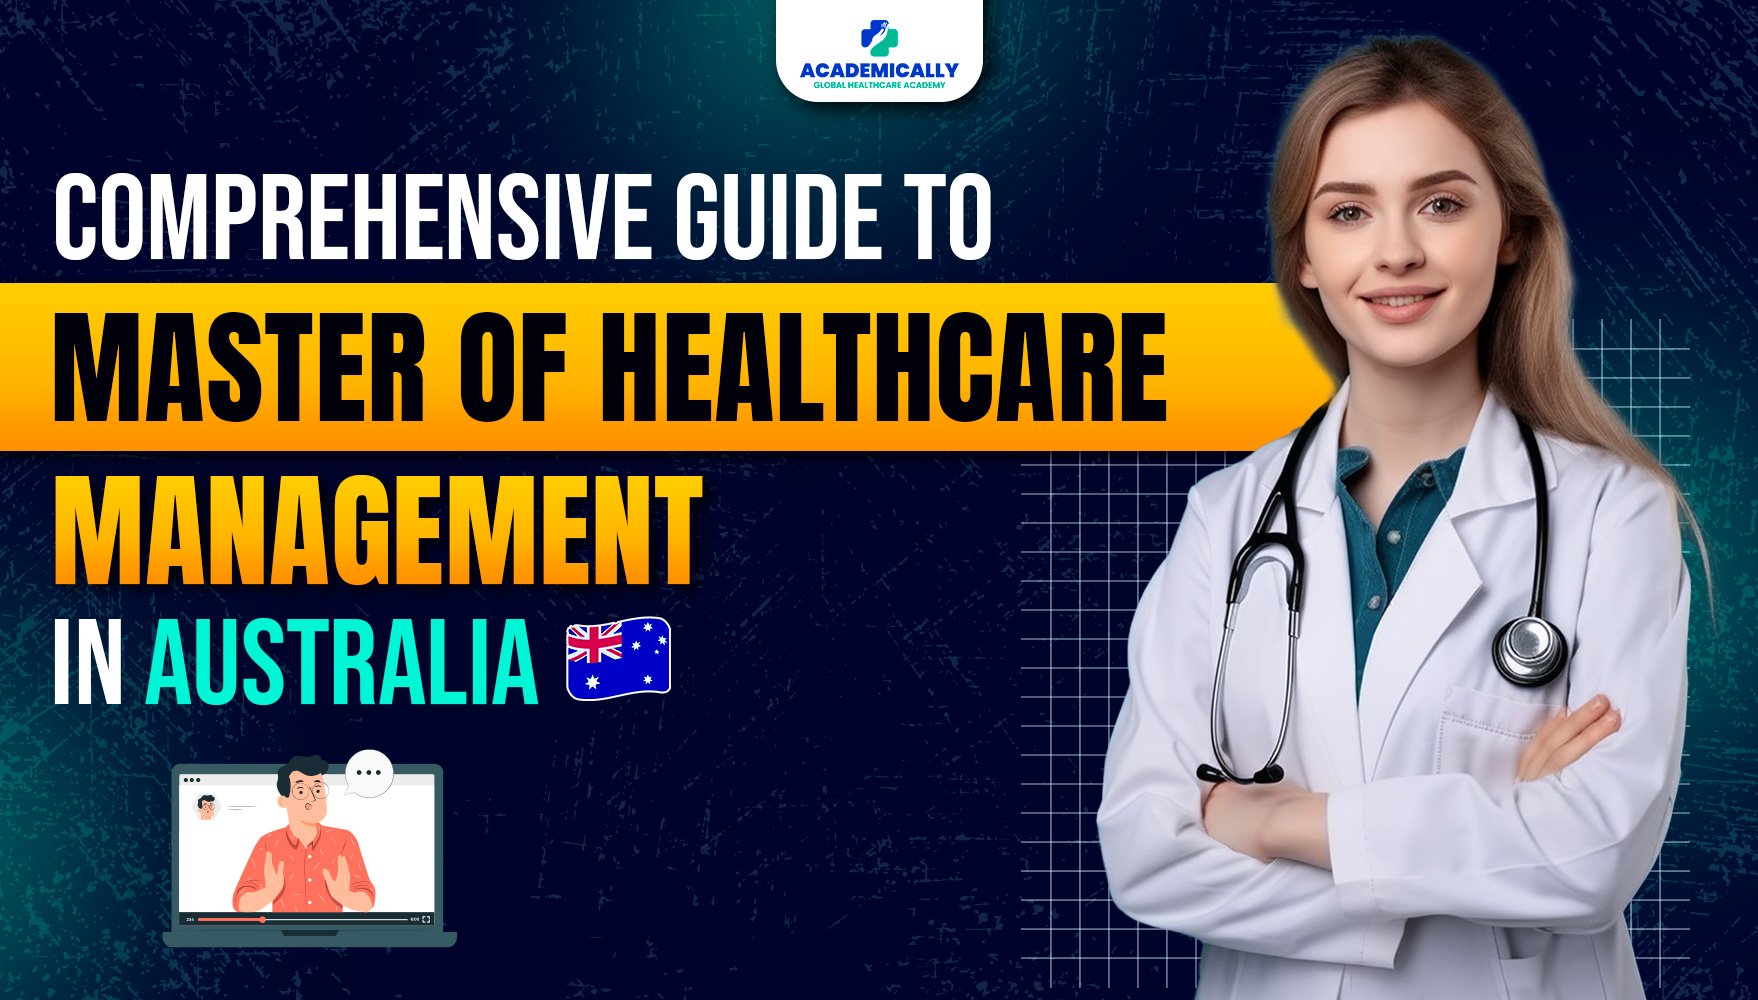 Master of Healthcare Management in Australia